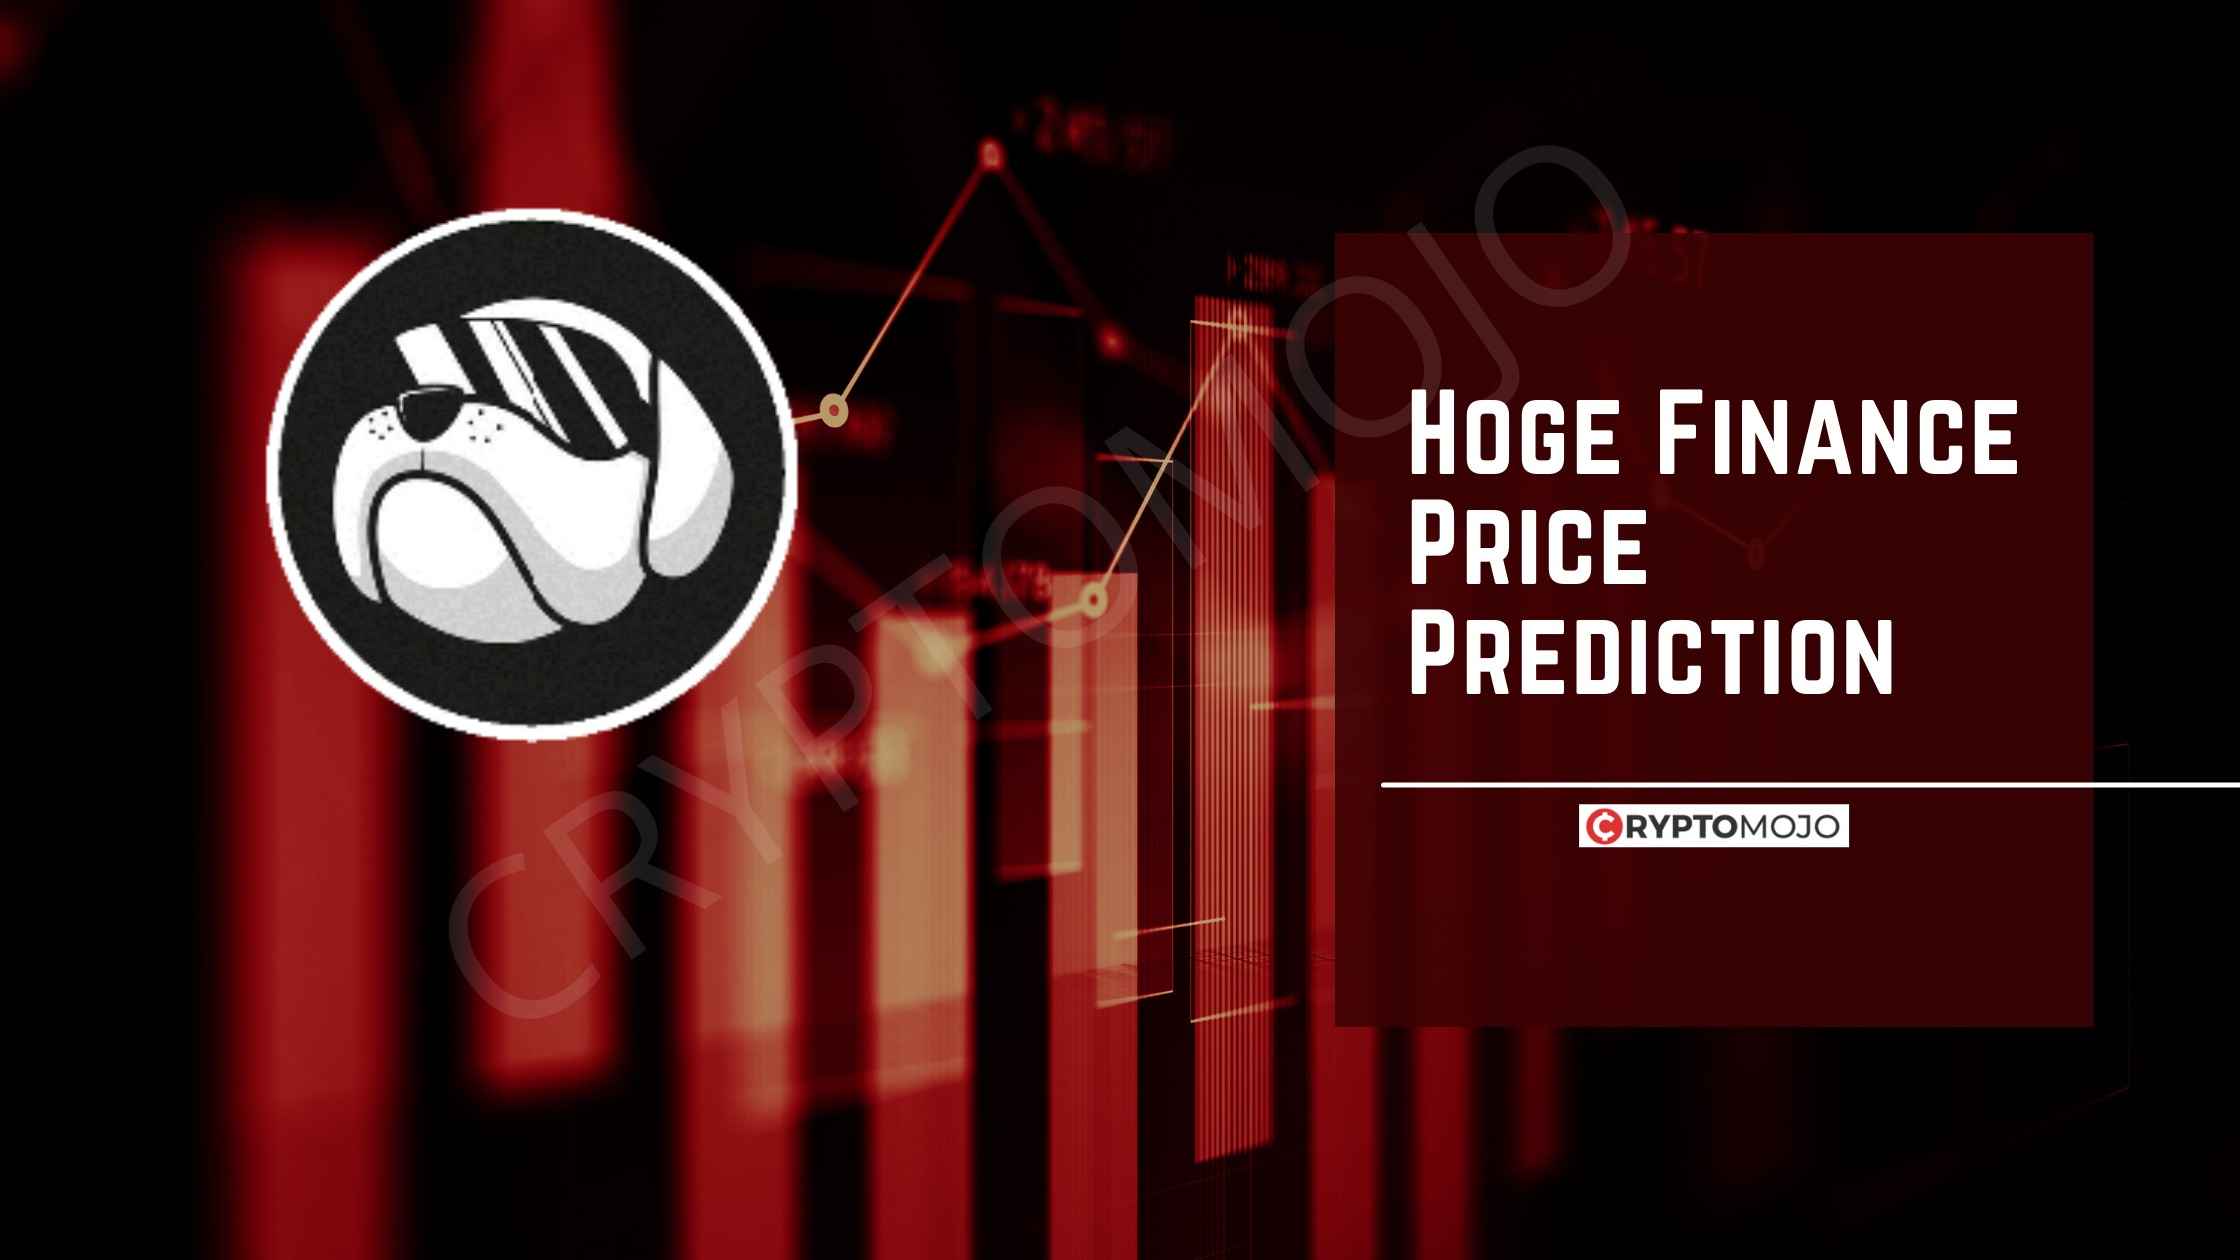 Hoge Finance Price Prediction